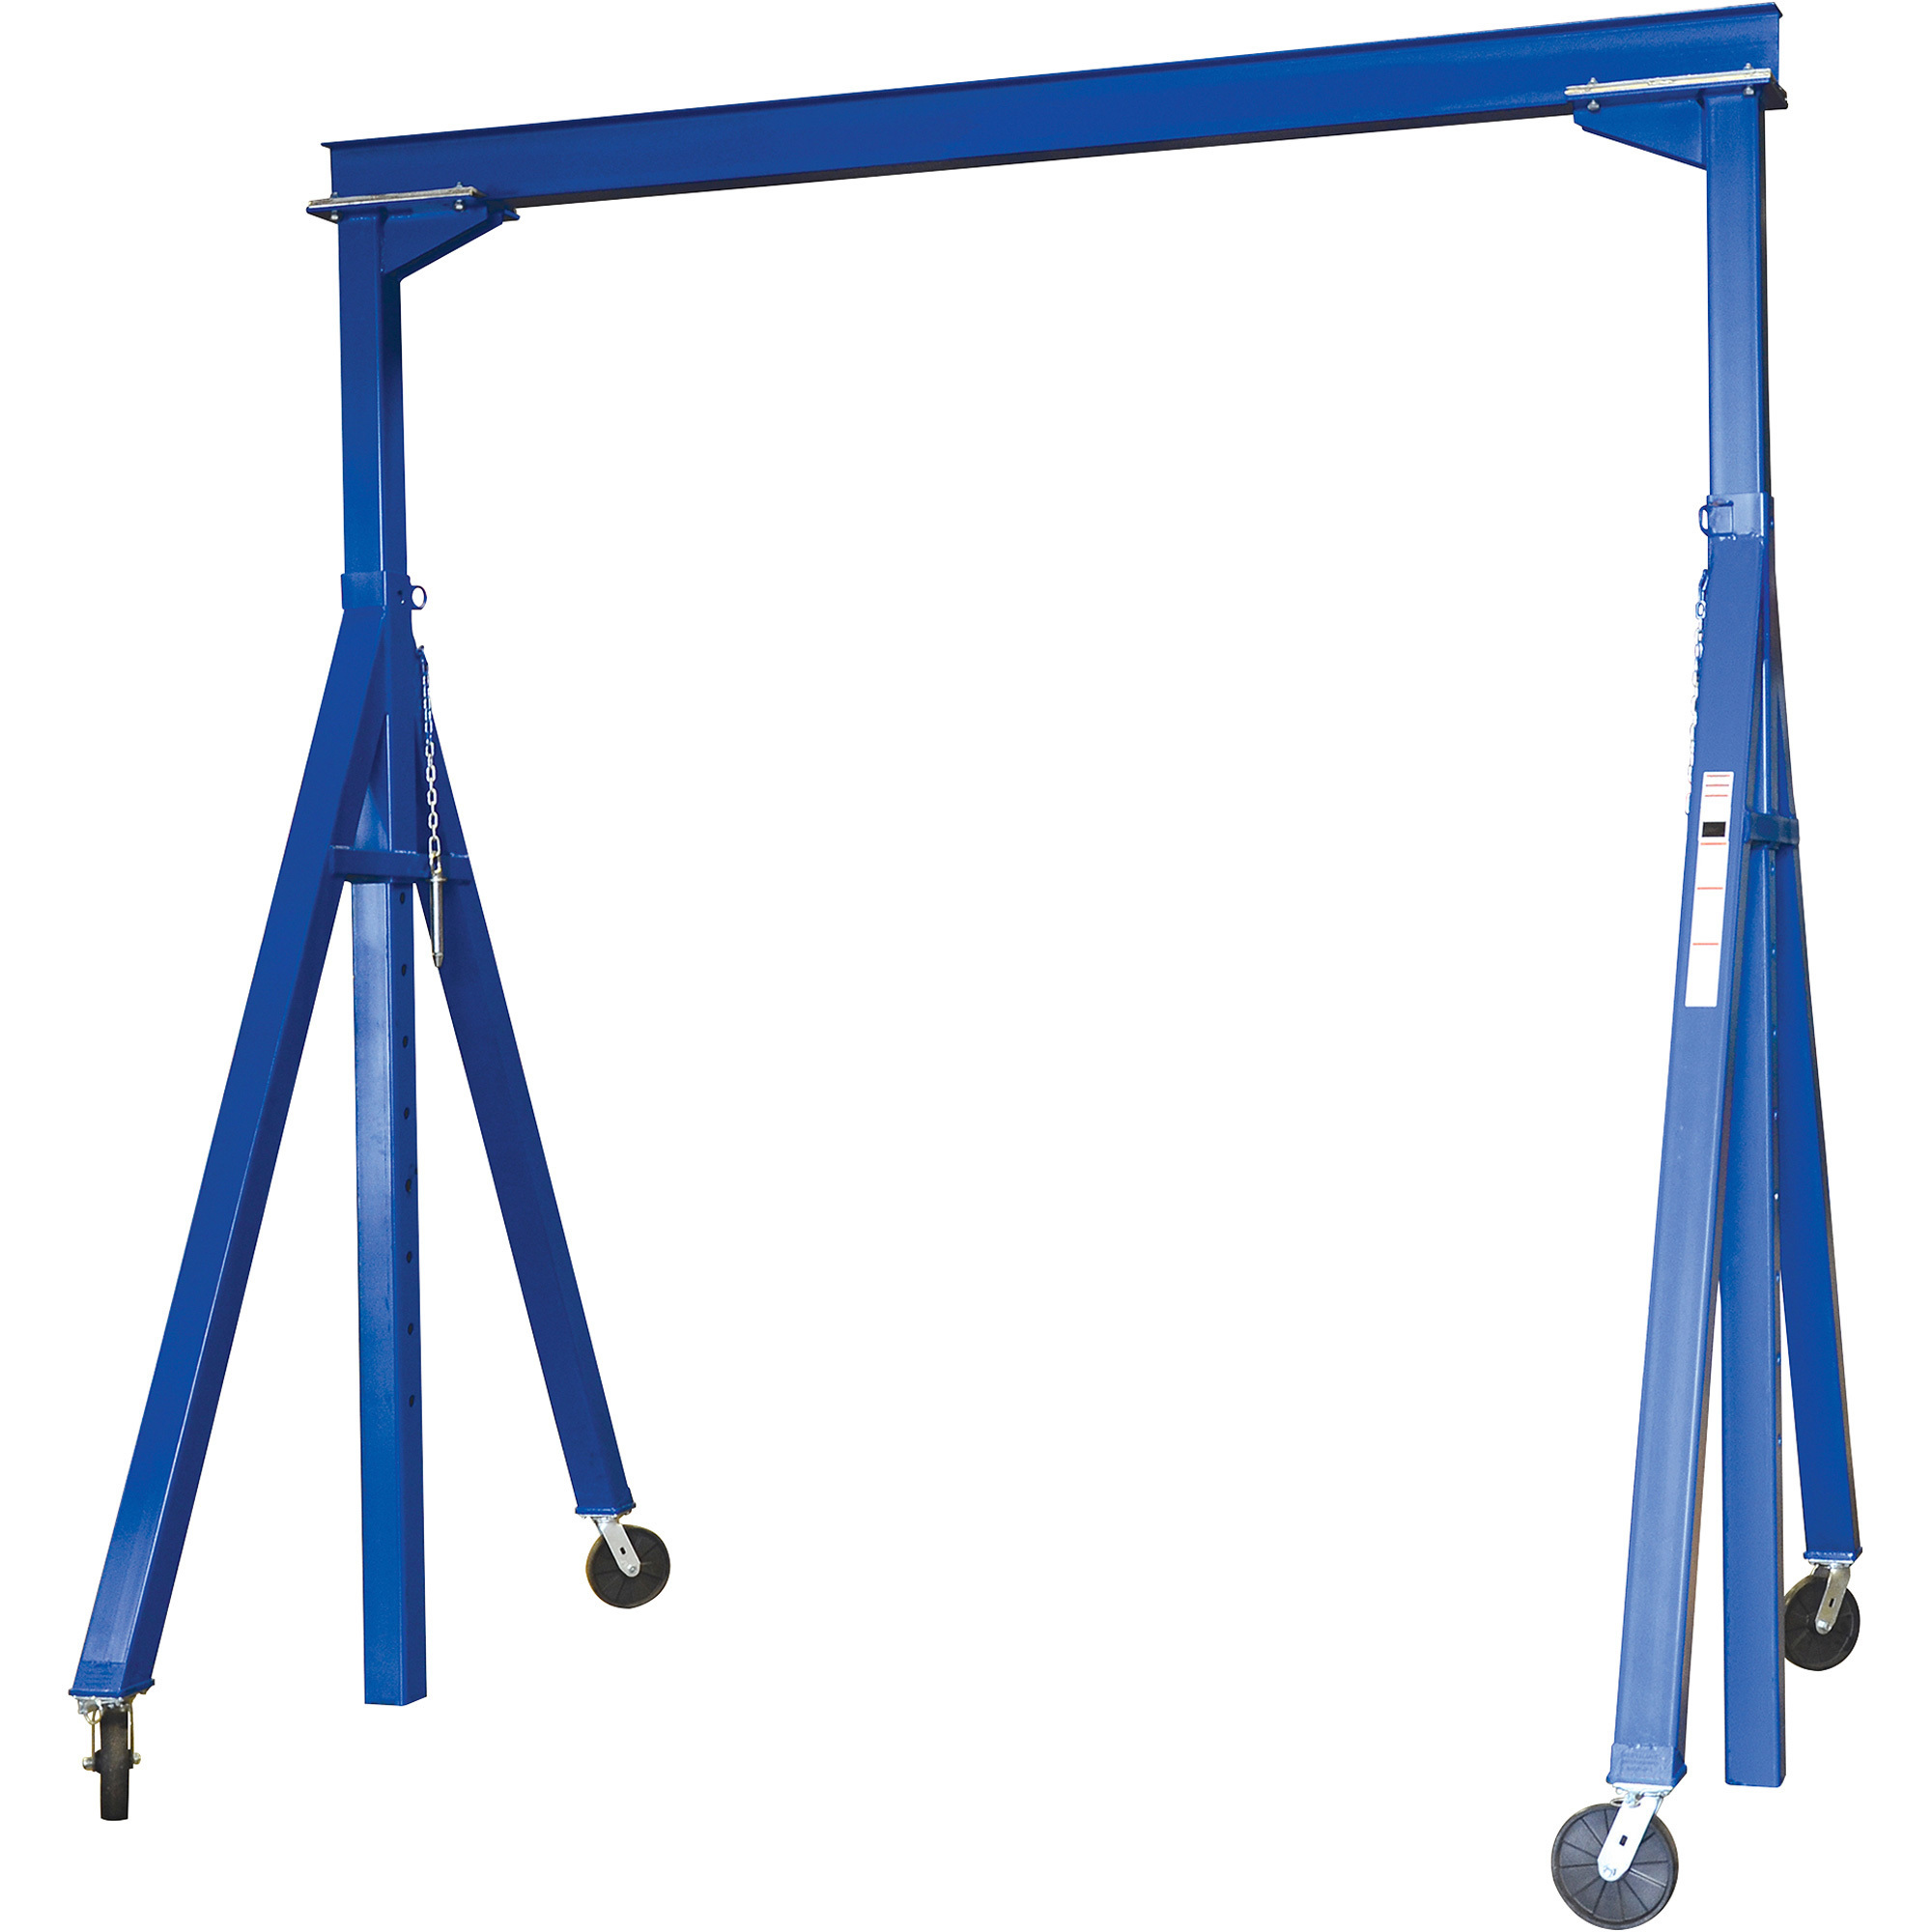 Vestil Steel Adjustable Height Gantry Crane with Glass Filled Nylon Casters, 4,000-Lb. Capacity, Blue, 10ft. x 12ft., Model AHS-4-10-12